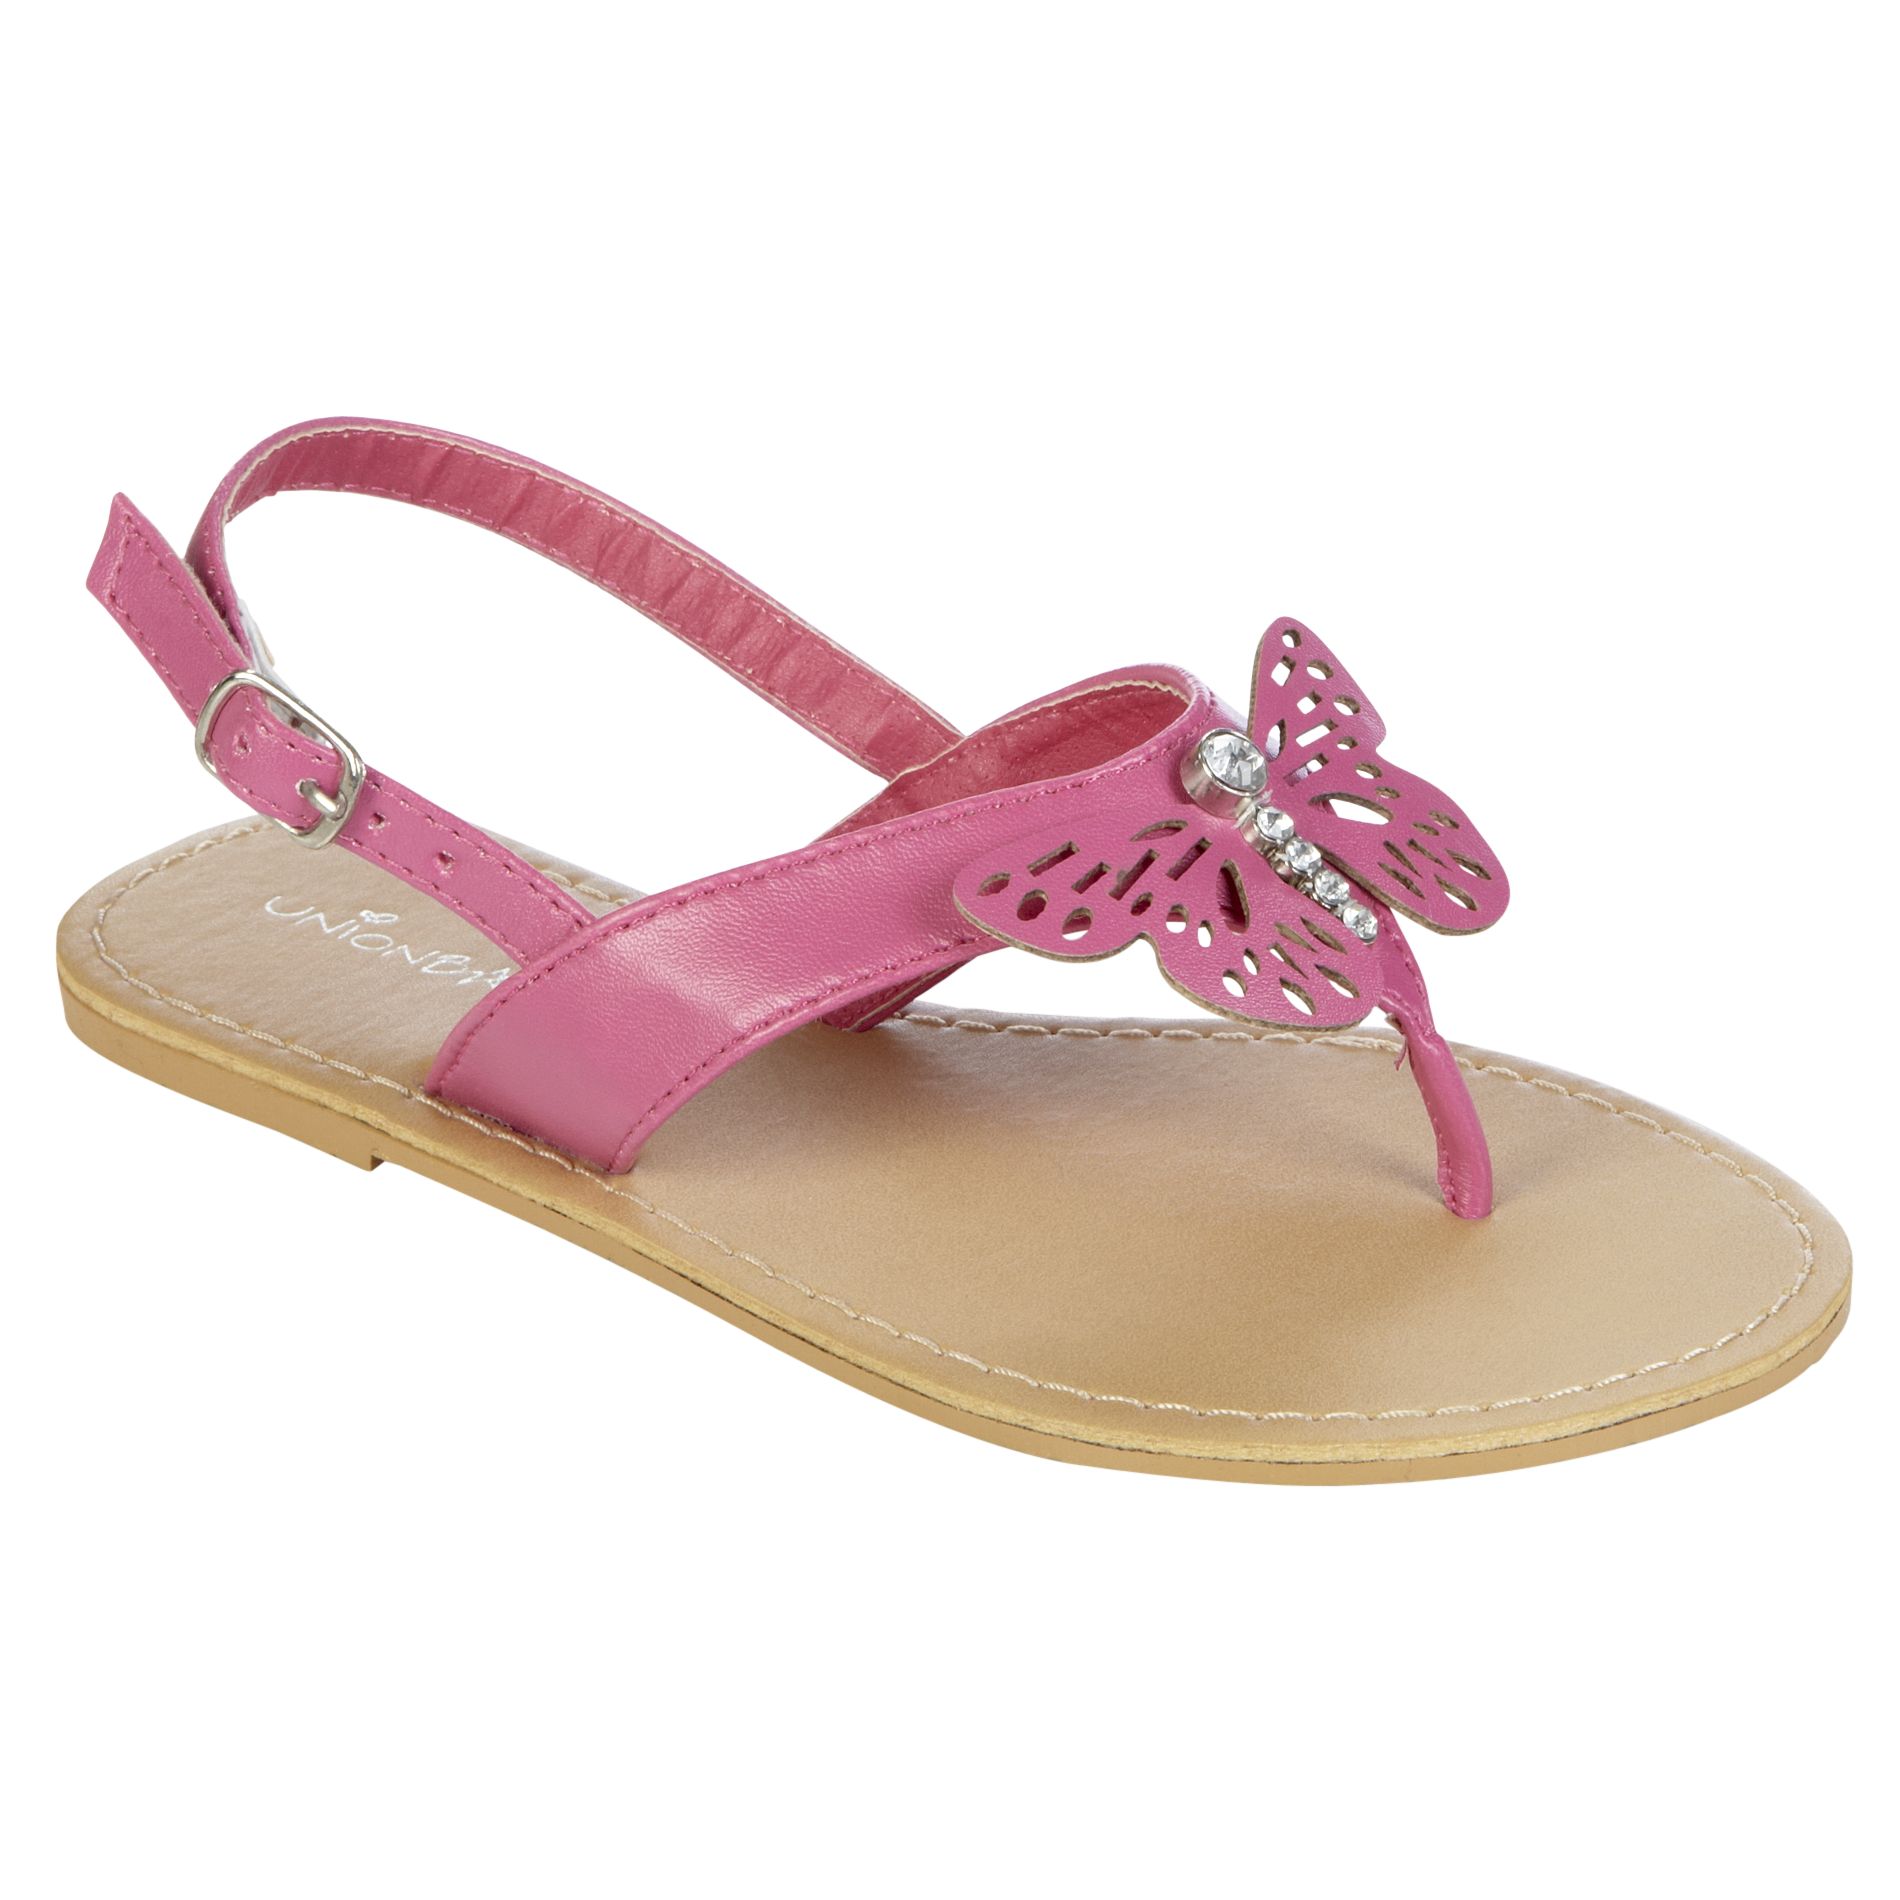 Unionbay Girl's Sweetfly-G Sandal - Pink